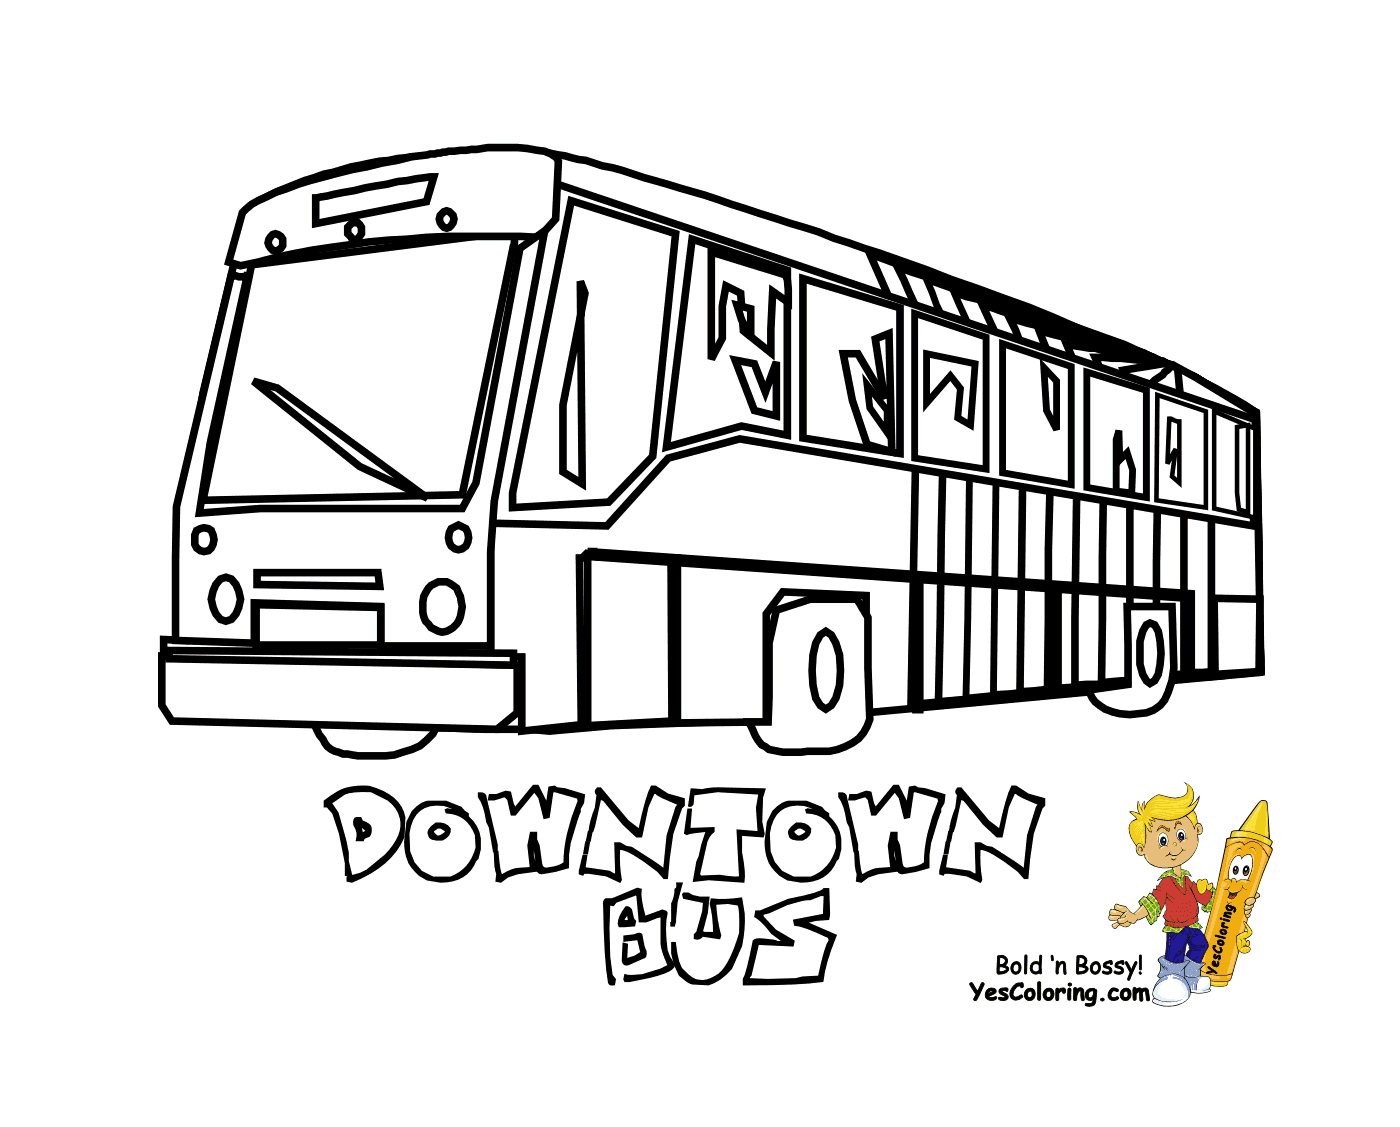   Un bus urbain circule en plein centre-ville 